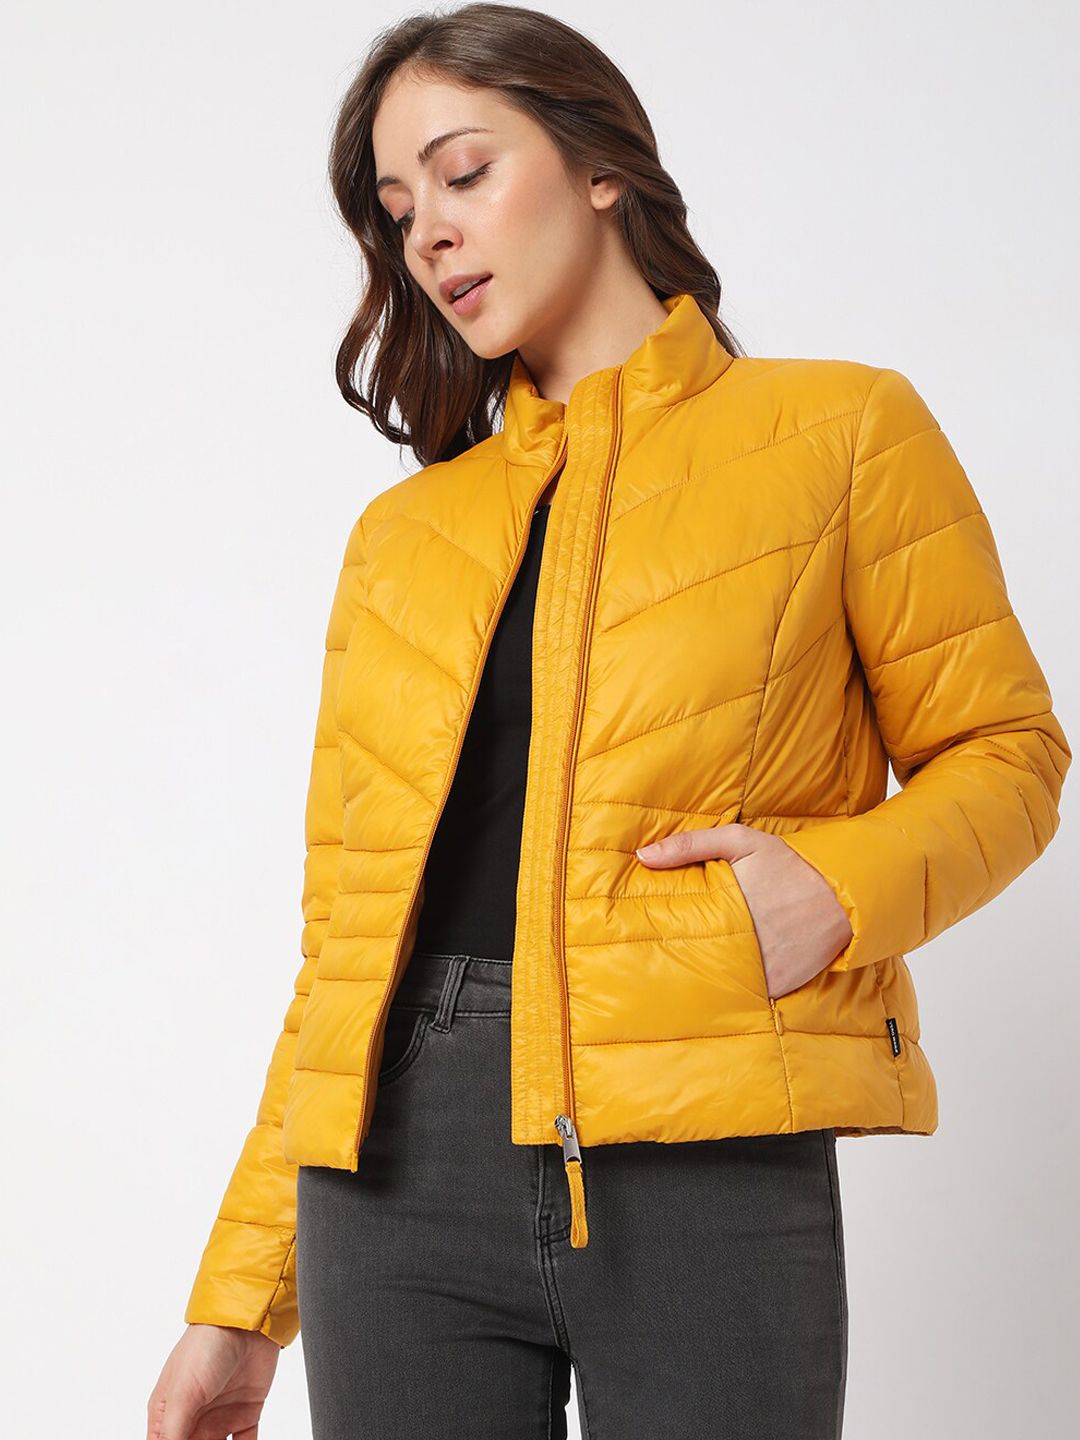 Buy Moda Vero Moda Women Yellow Jacket at